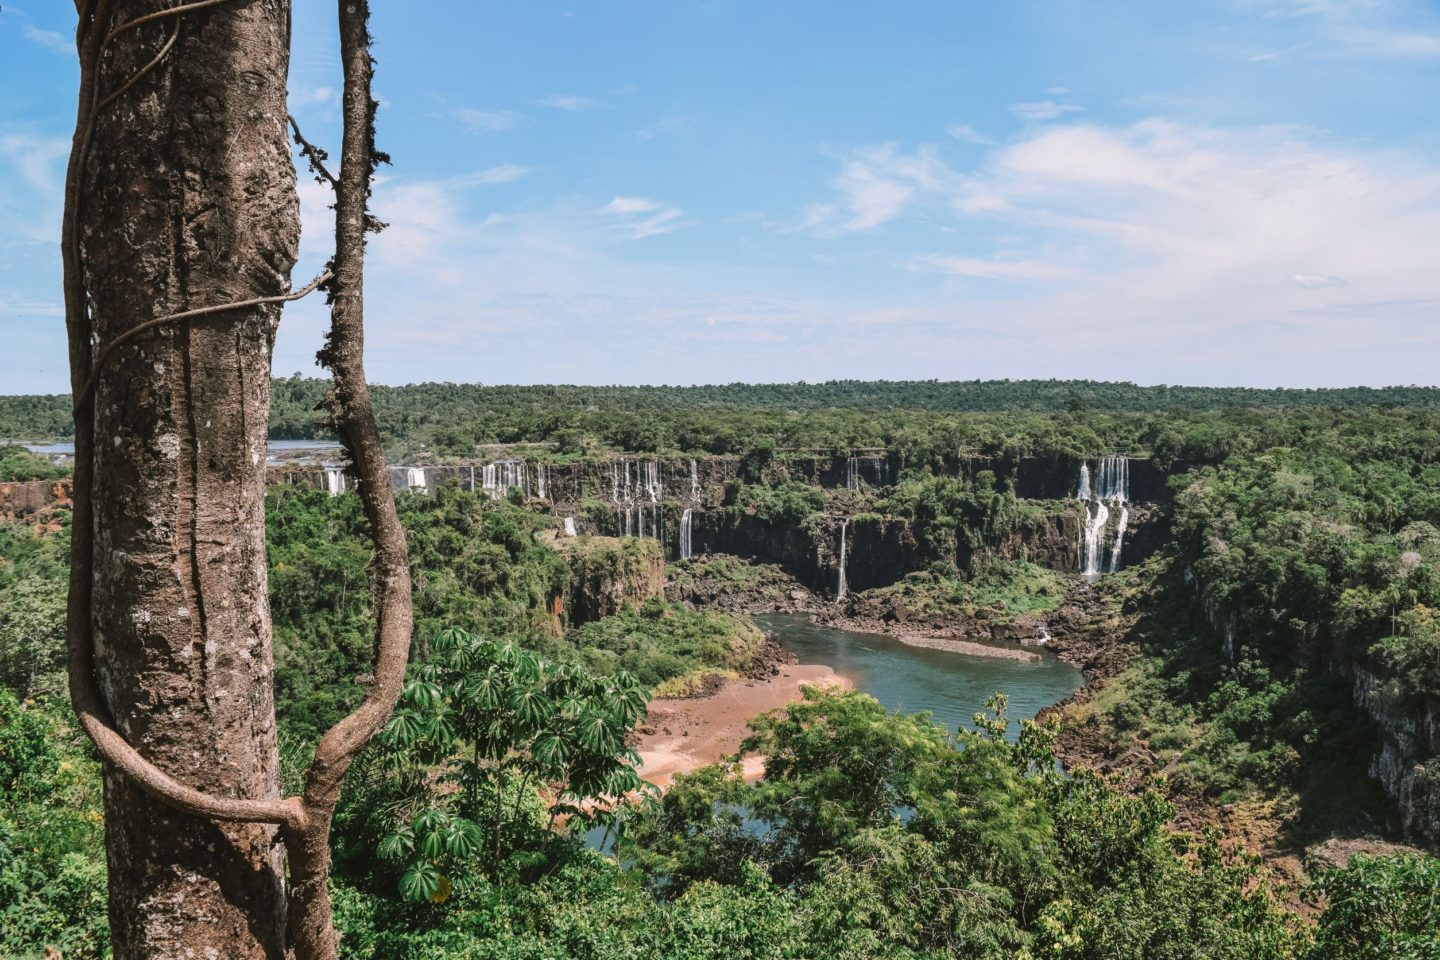 Visiting Iguazu Falls national park